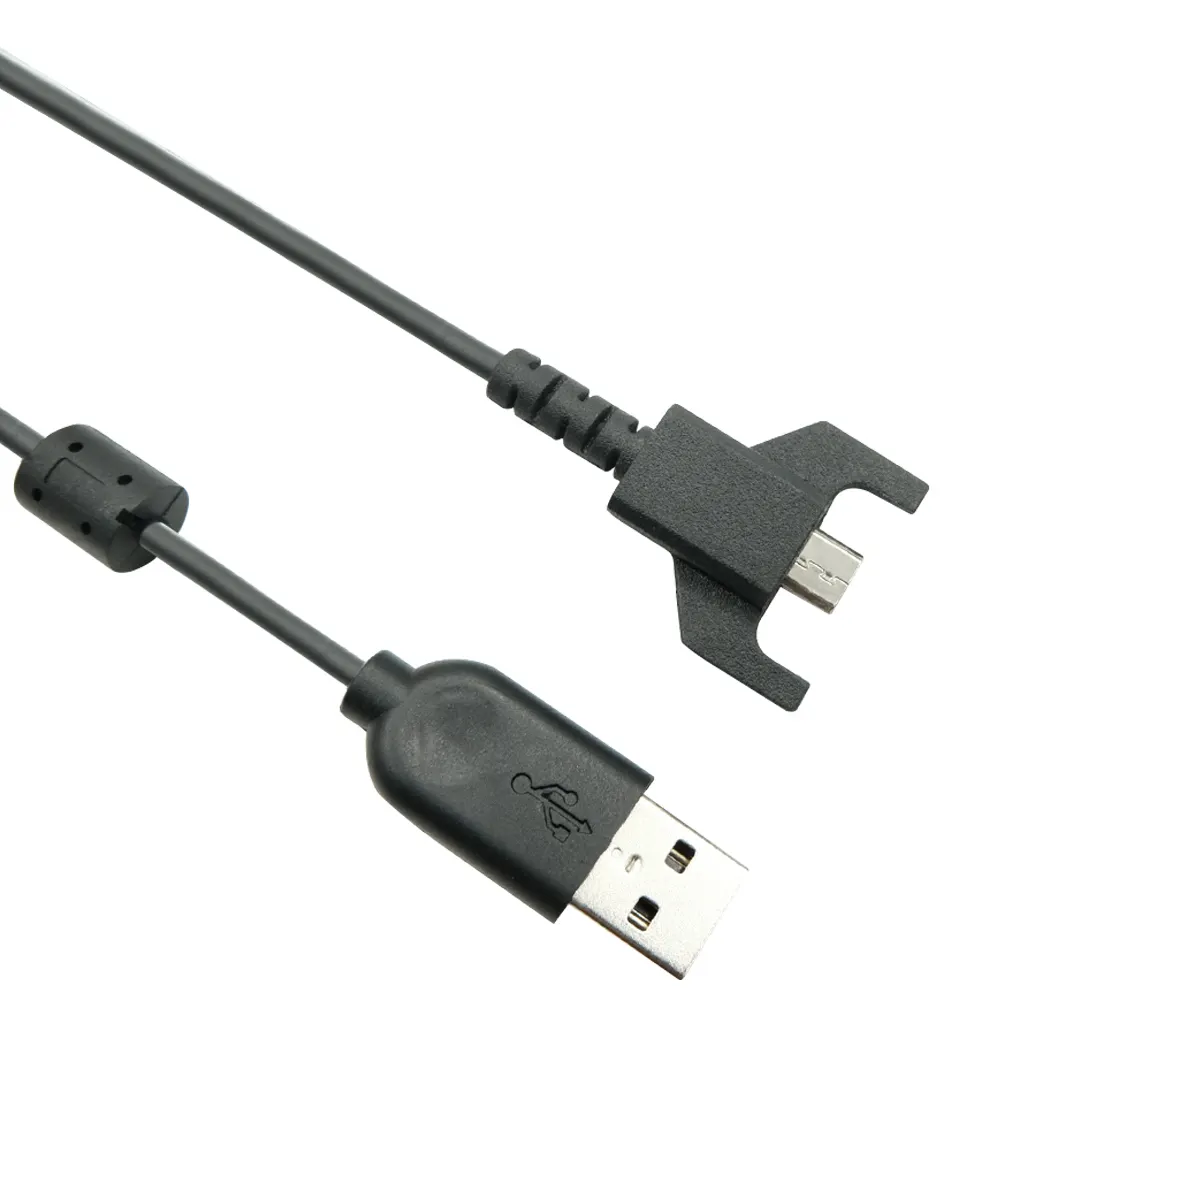 G703 G900 G903 G ProワイヤレスG Pro X超軽量ゲーミングマウス用LogitechオリジナルUSB充電ケーブル、USB-マイクロUSB (ブラック)